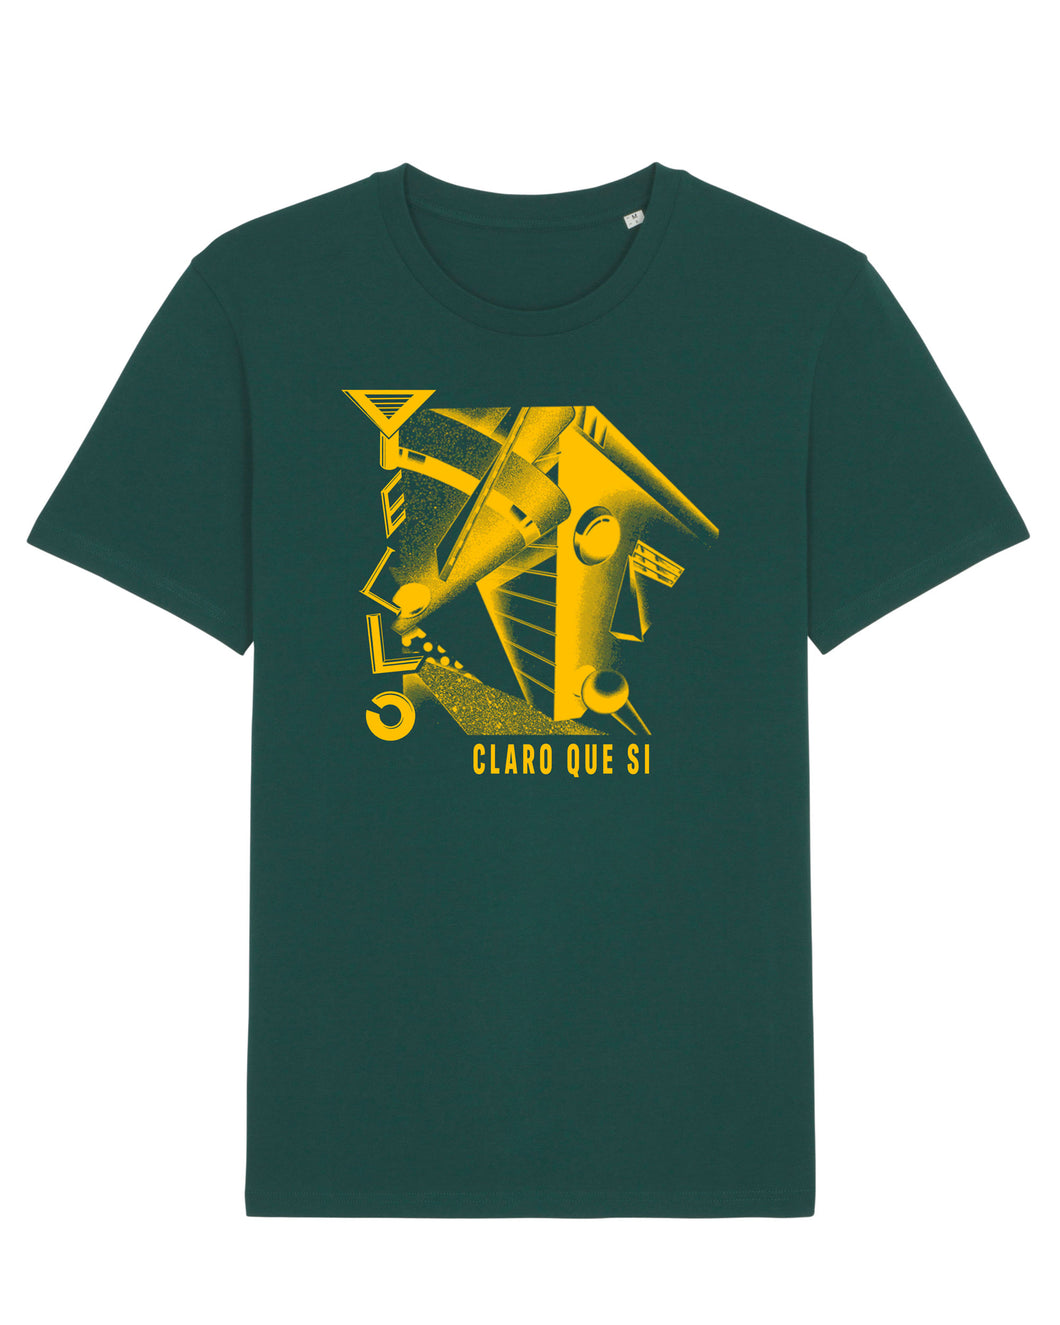 Yello - CLARO QUE SI - Organic T-Shirt